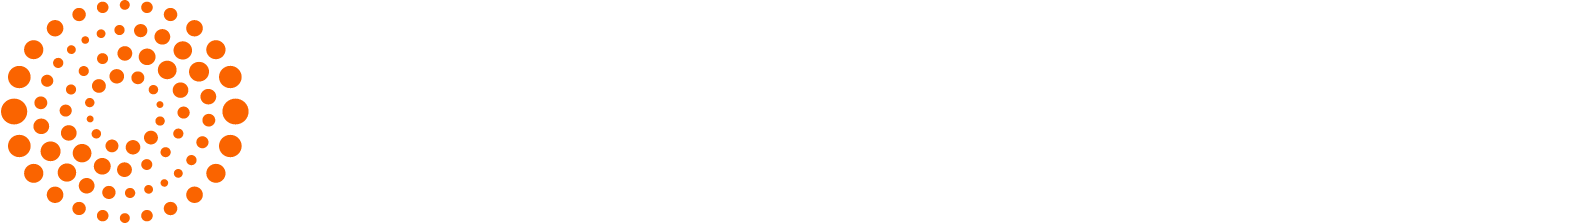 Thomson Reuters
 Logo groß für dunkle Hintergründe (transparentes PNG)